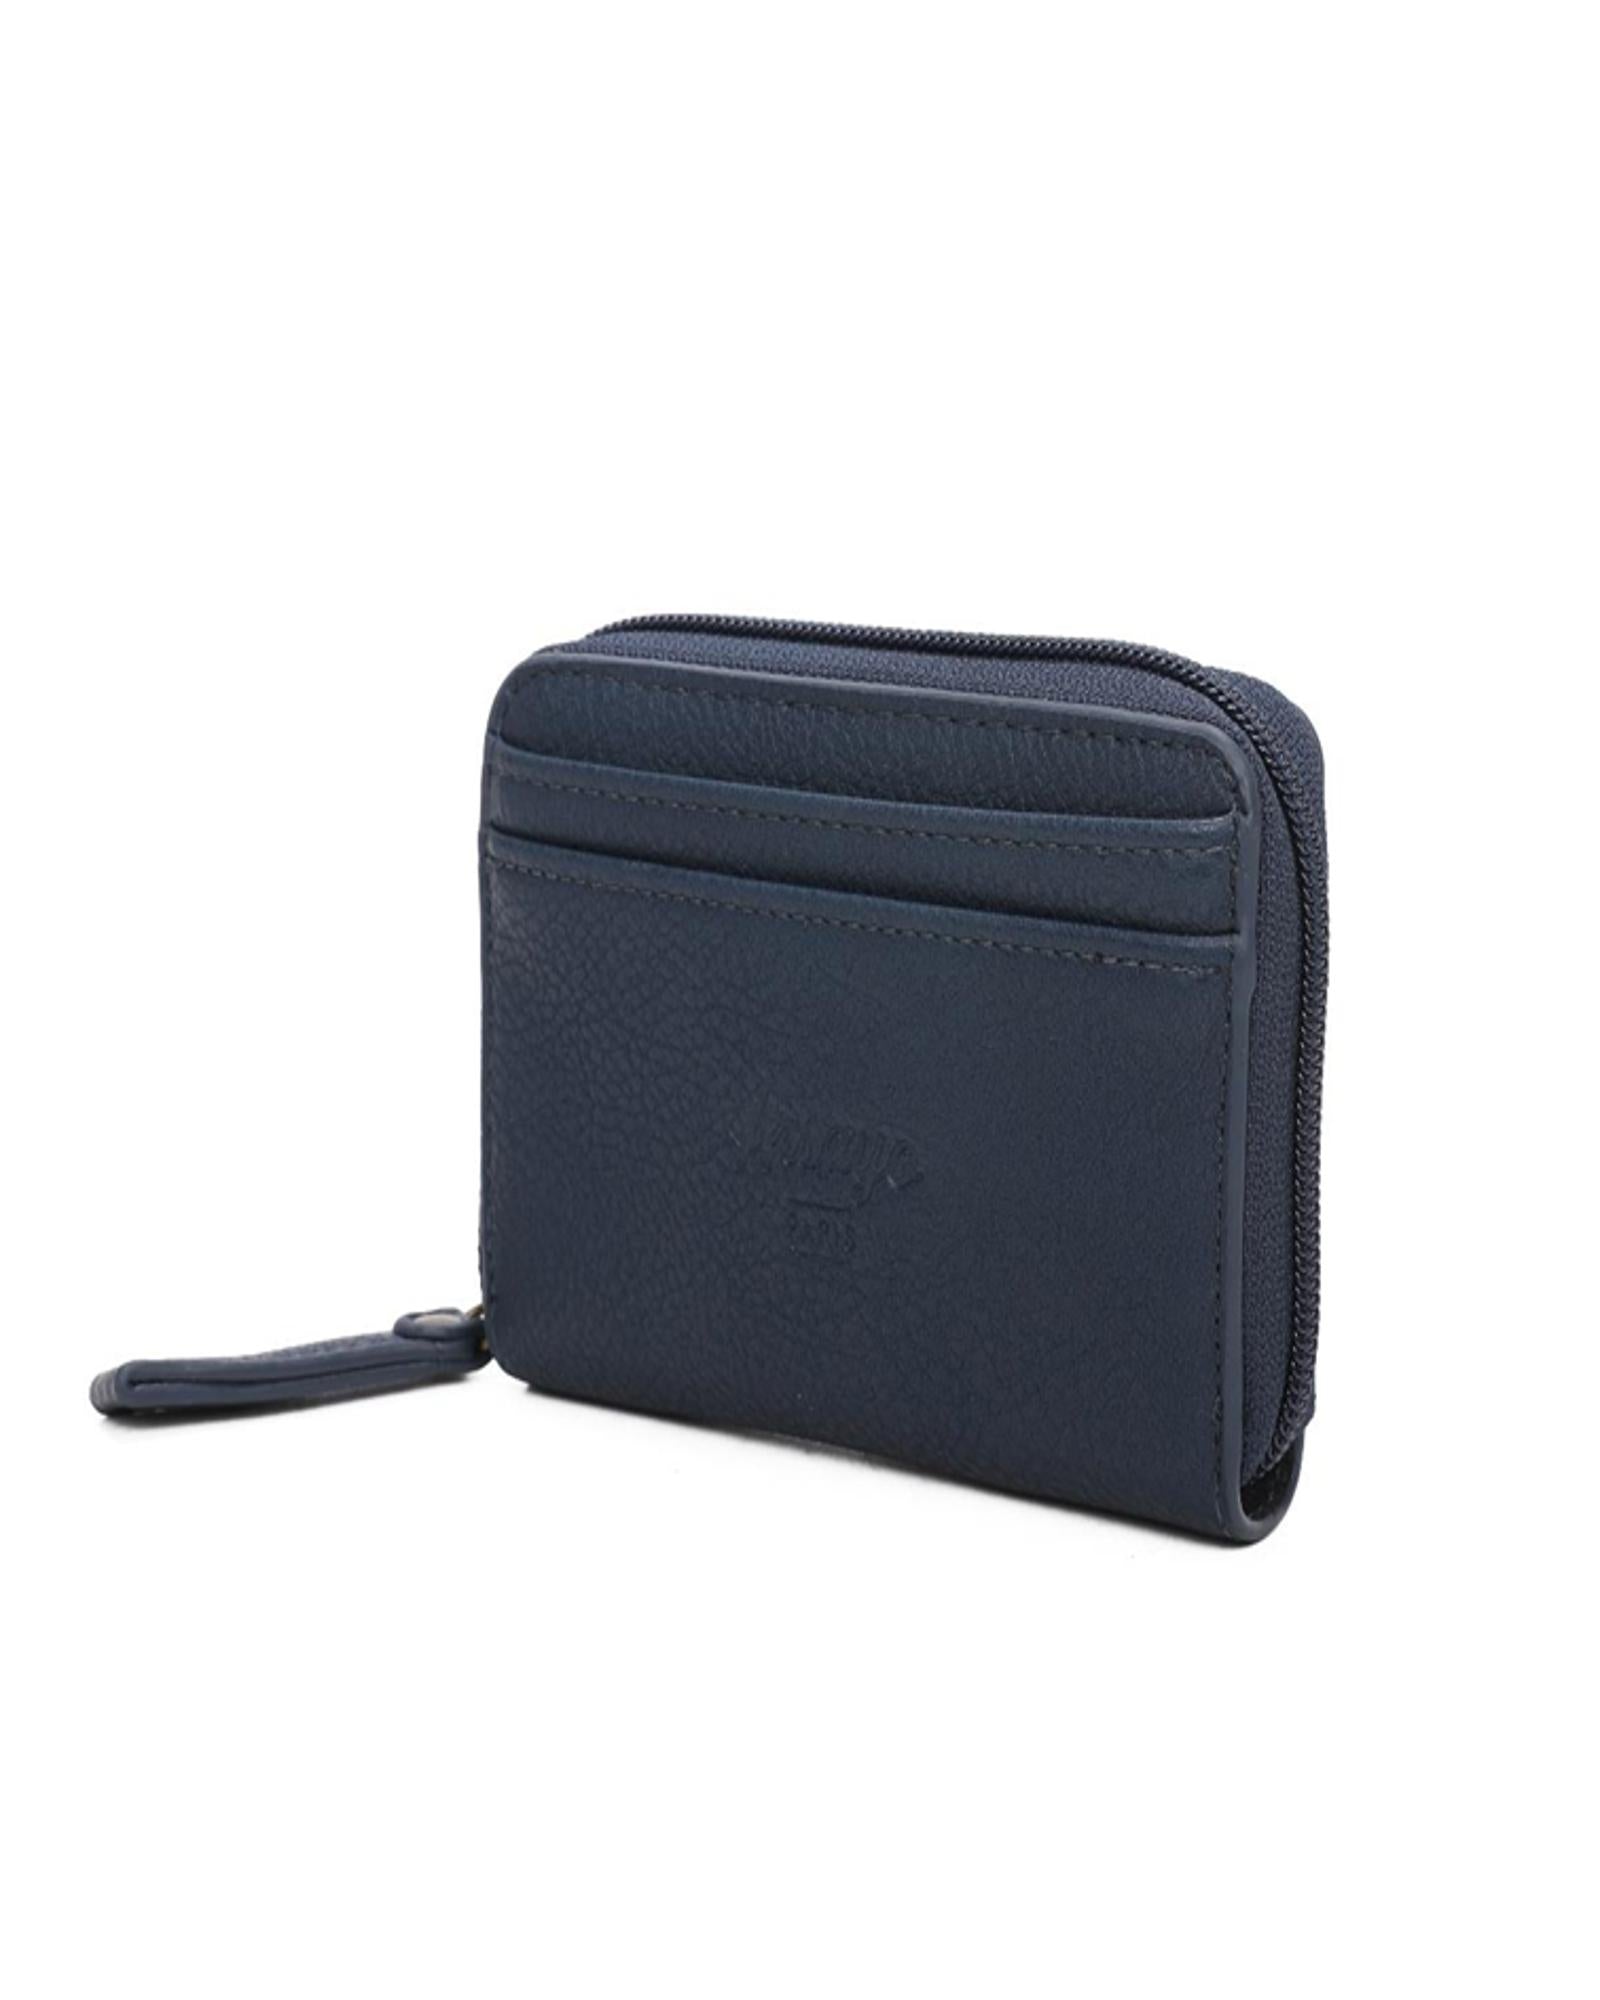 ARSAYO - ARSAYO Original Small Wallet | Dark Blue